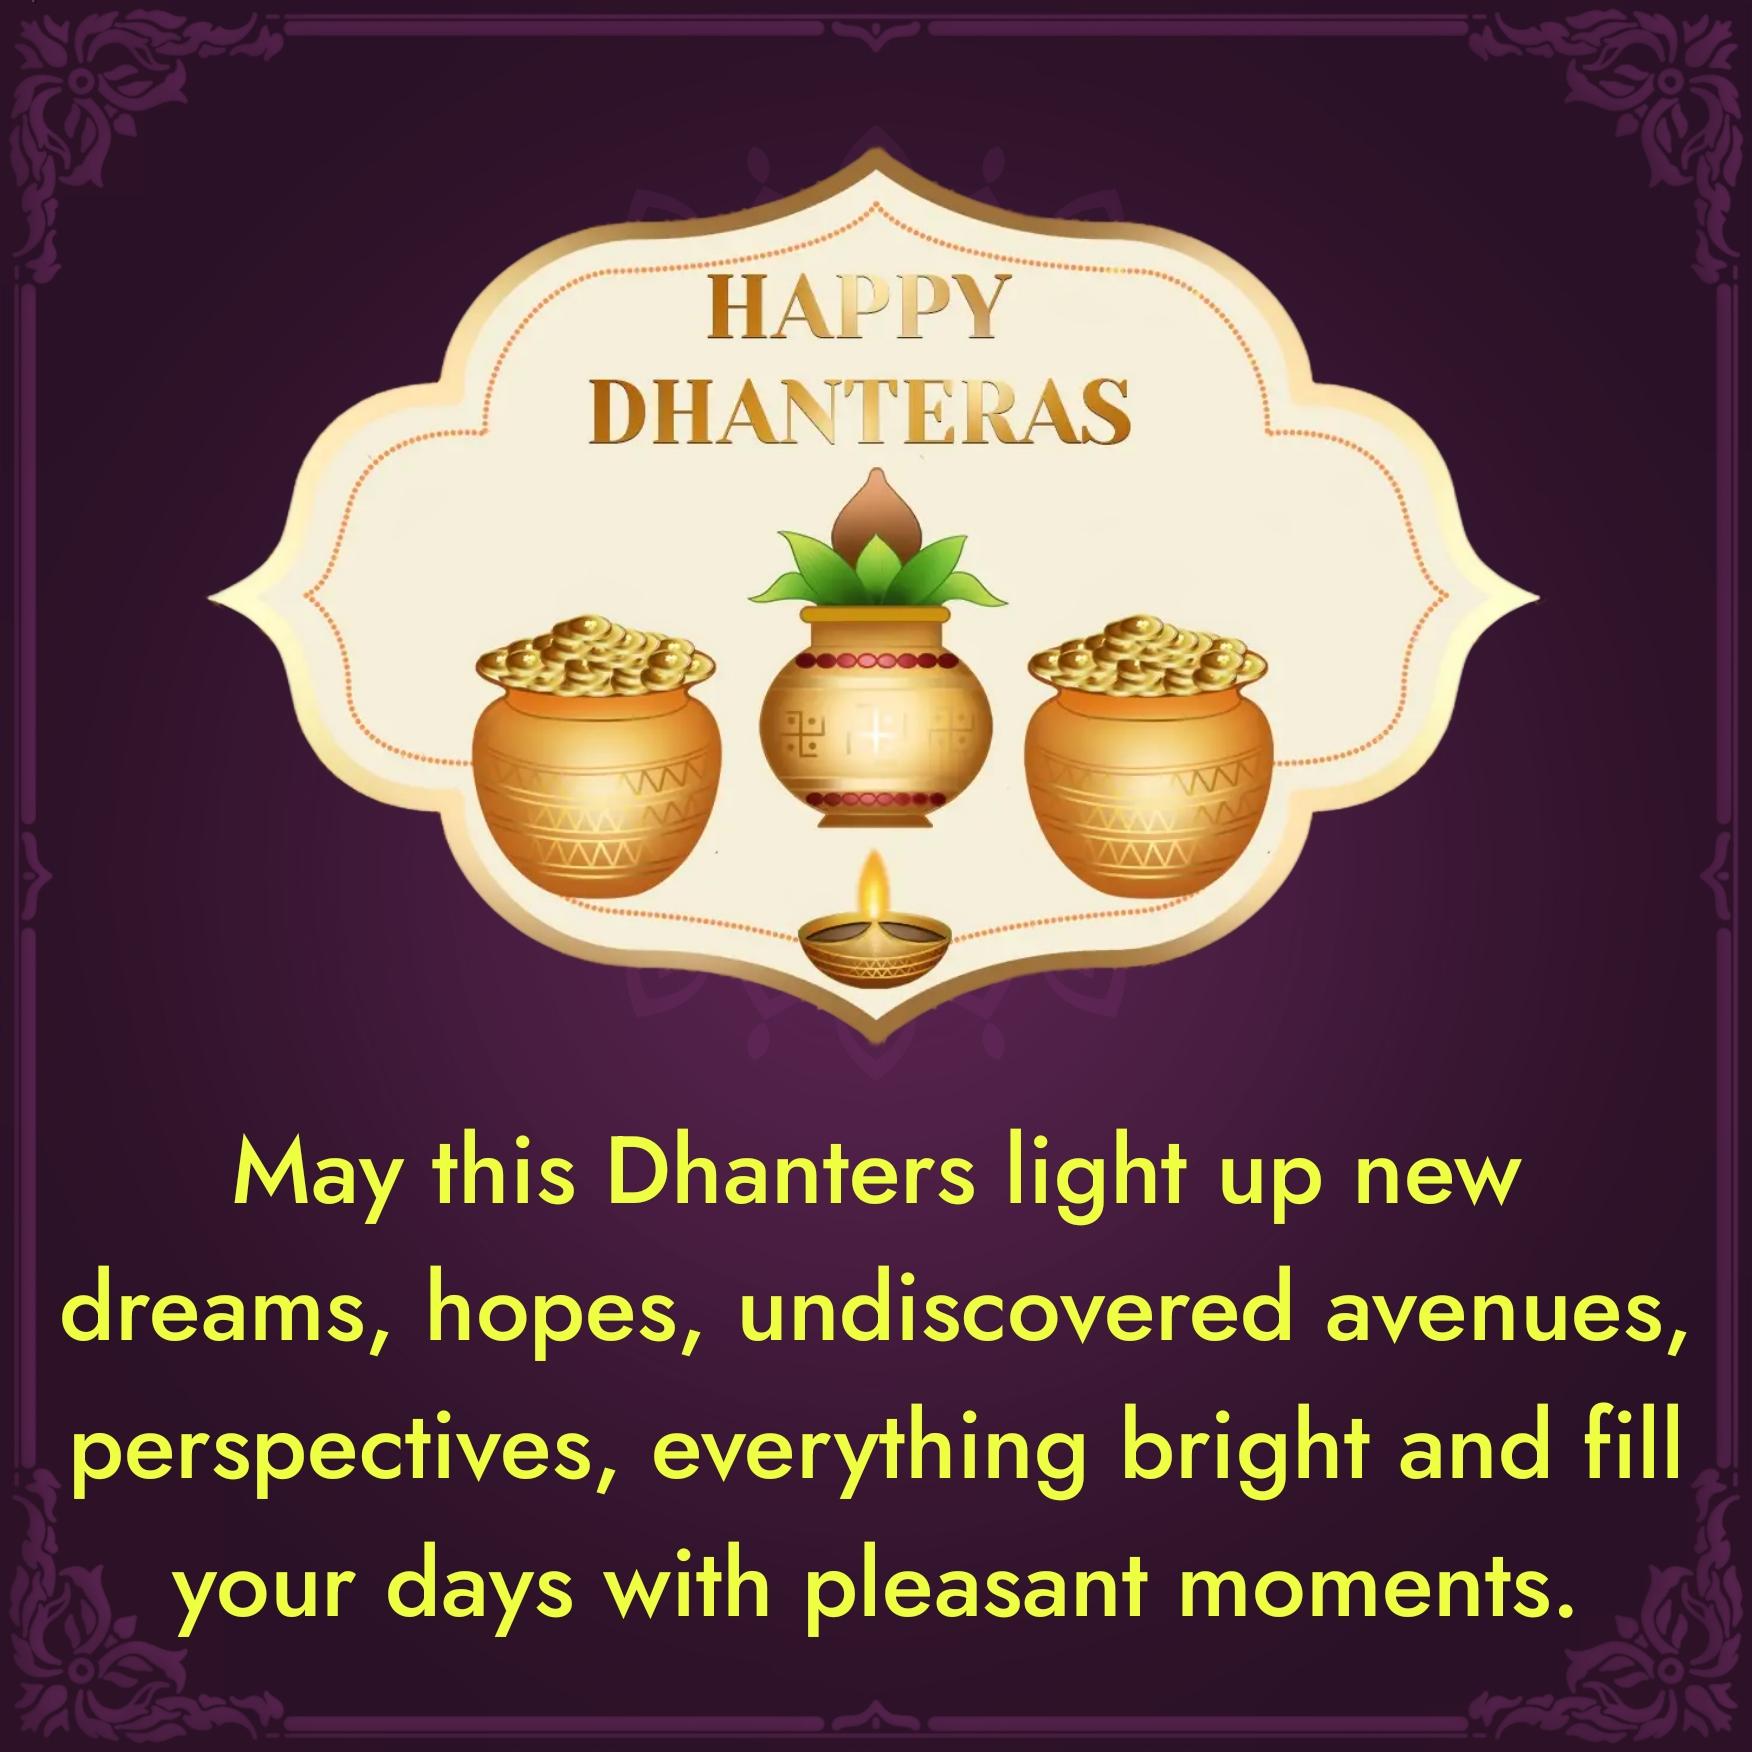 May this Dhanters light up new dreams hopes